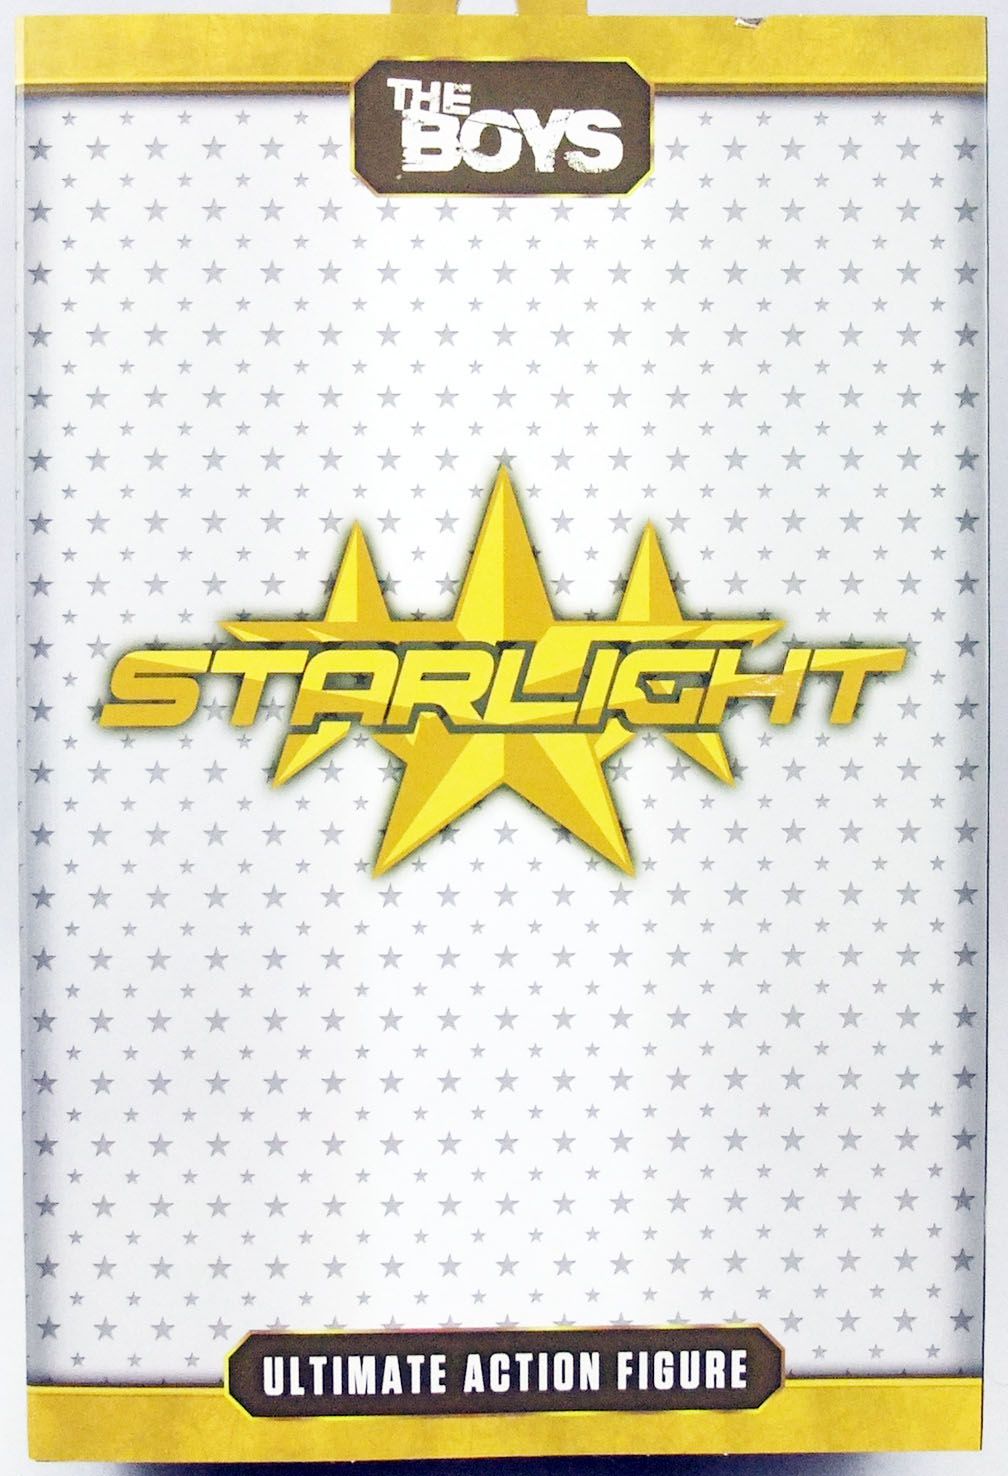 NECA The Boys: Starlight Ultimate 7 Action Figure